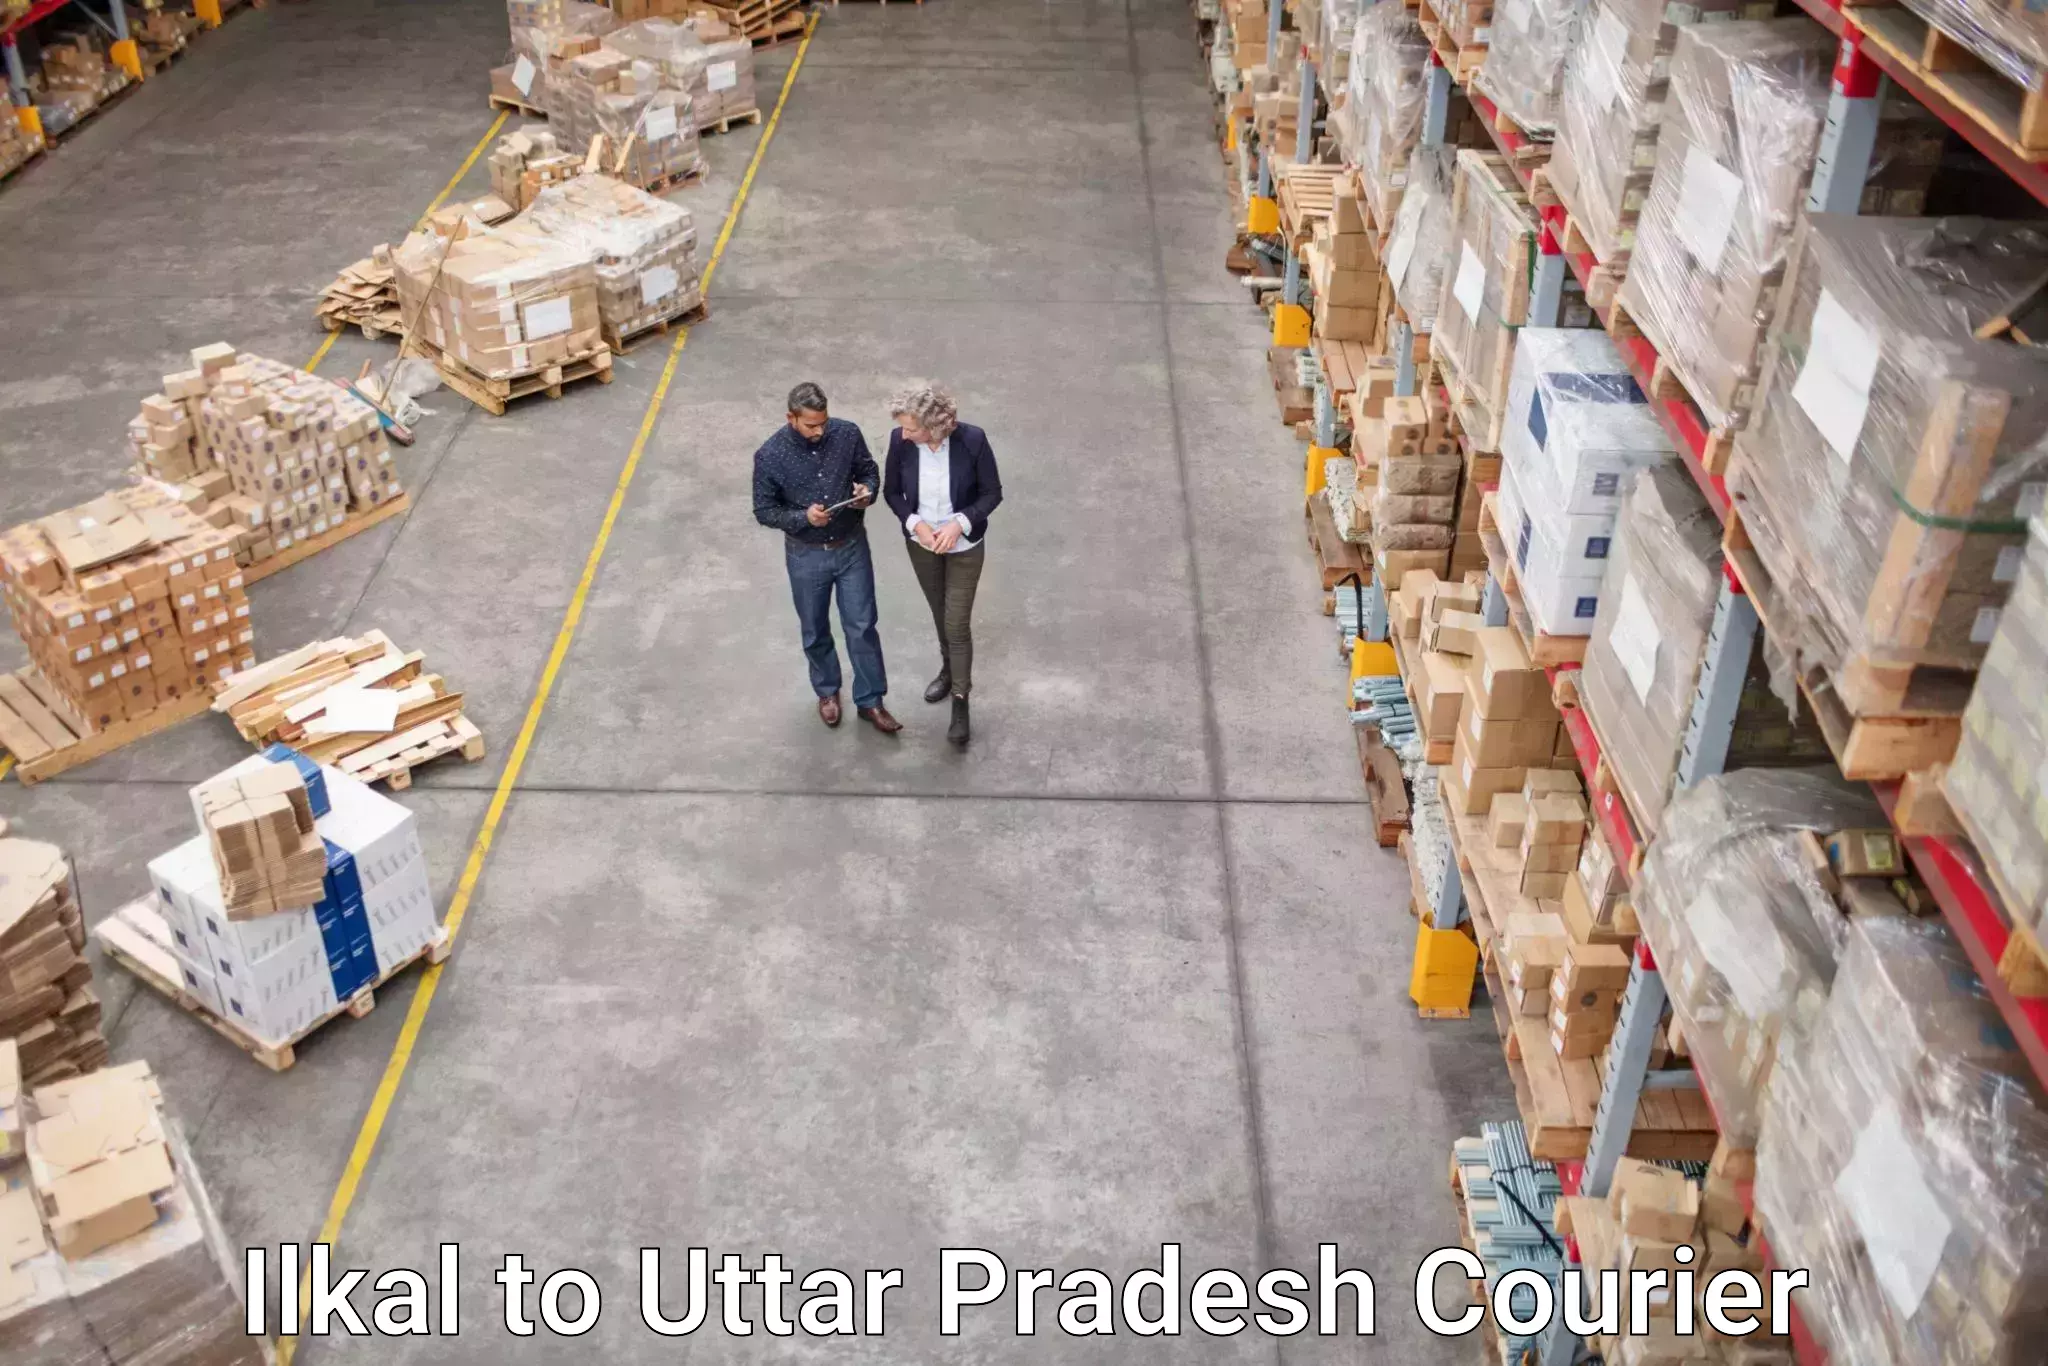 Courier service innovation Ilkal to Uttar Pradesh